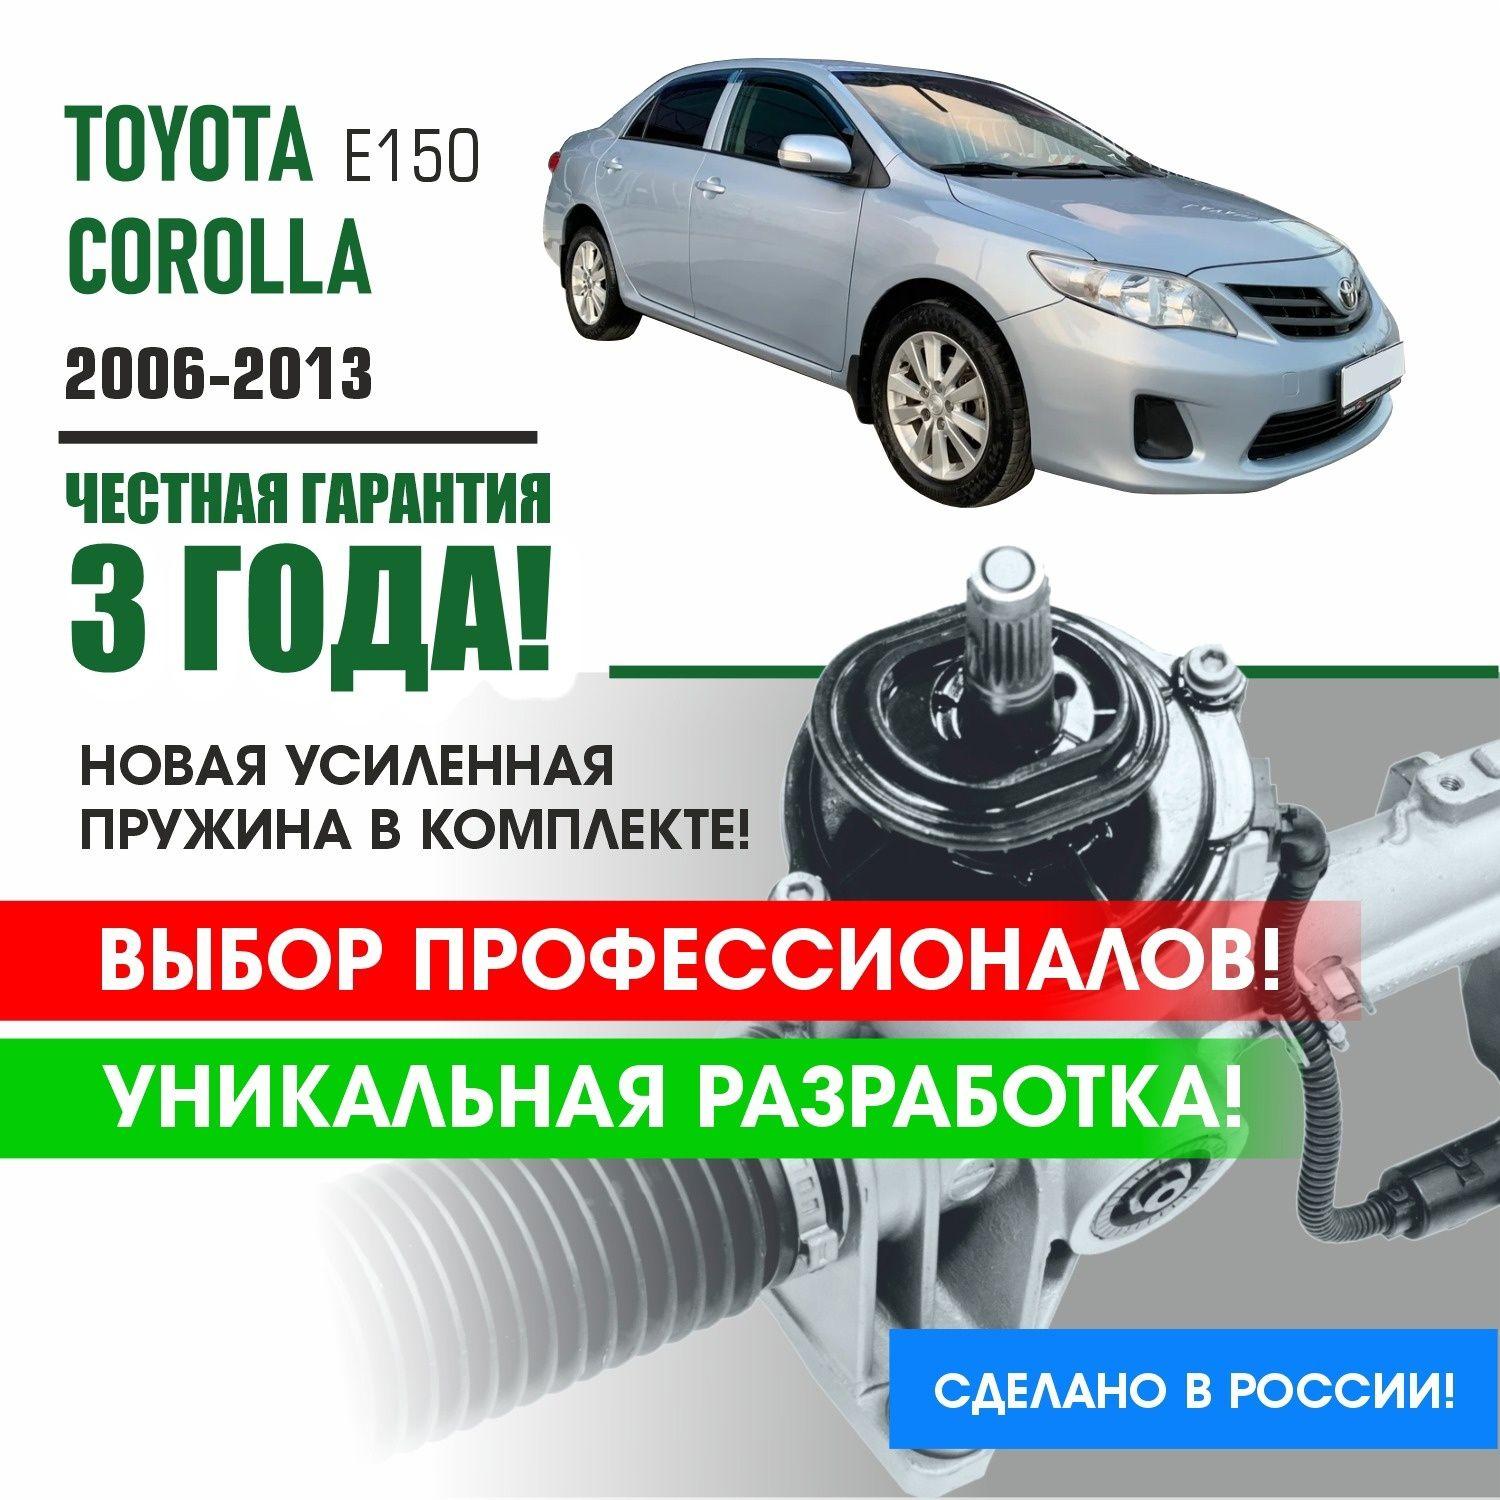 Втулка рулевой рейки для Toyota Corolla 150 кузов Toyota Corolla E150 2006-2013 ЭУР Поджимная и опорная втулка рулевой рейки полиацетальи